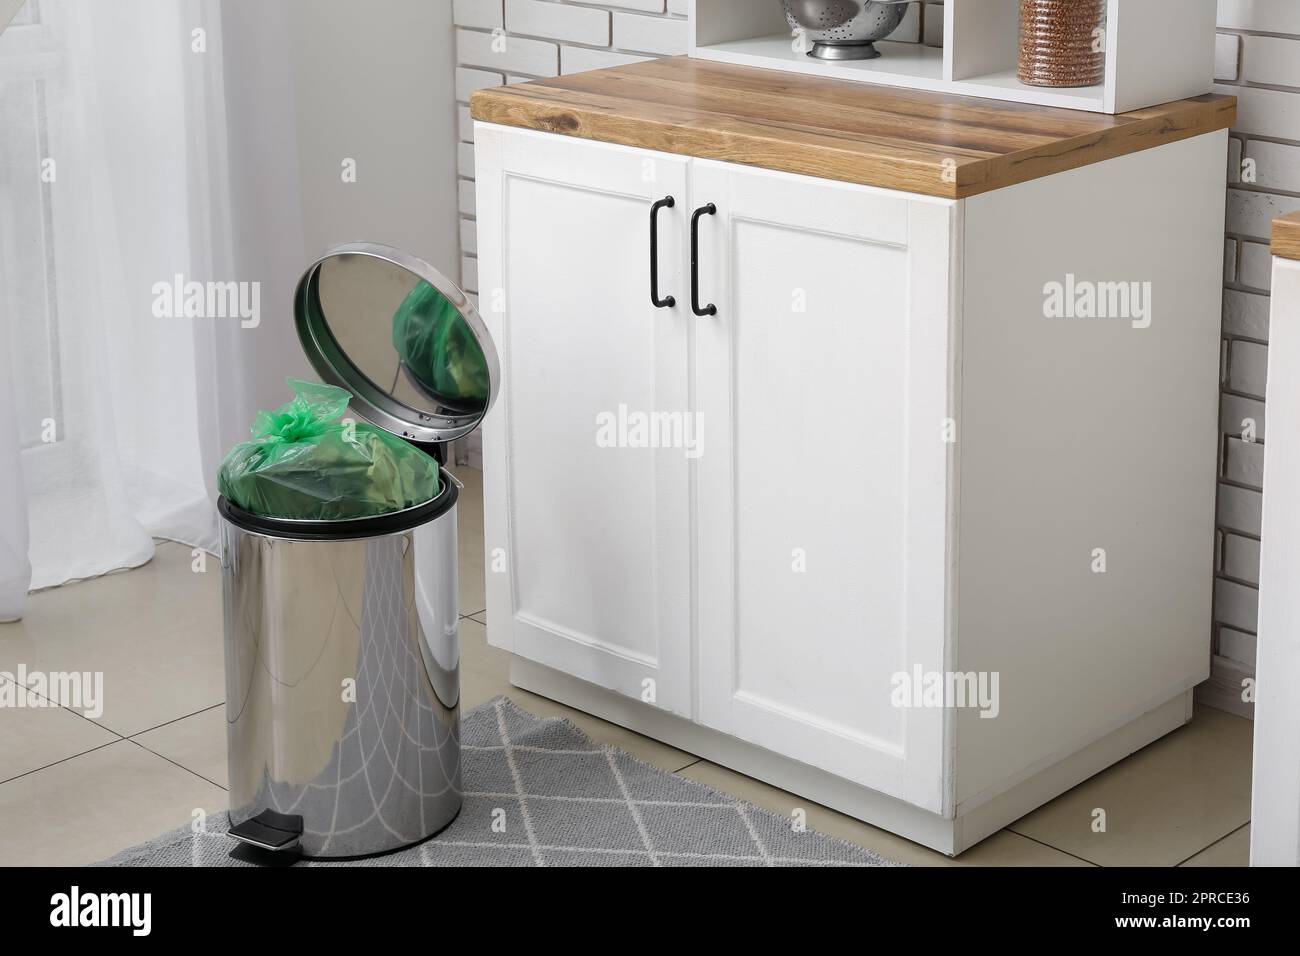 https://c8.alamy.com/comp/2PRCE36/full-trash-bin-in-interior-of-modern-kitchen-2PRCE36.jpg